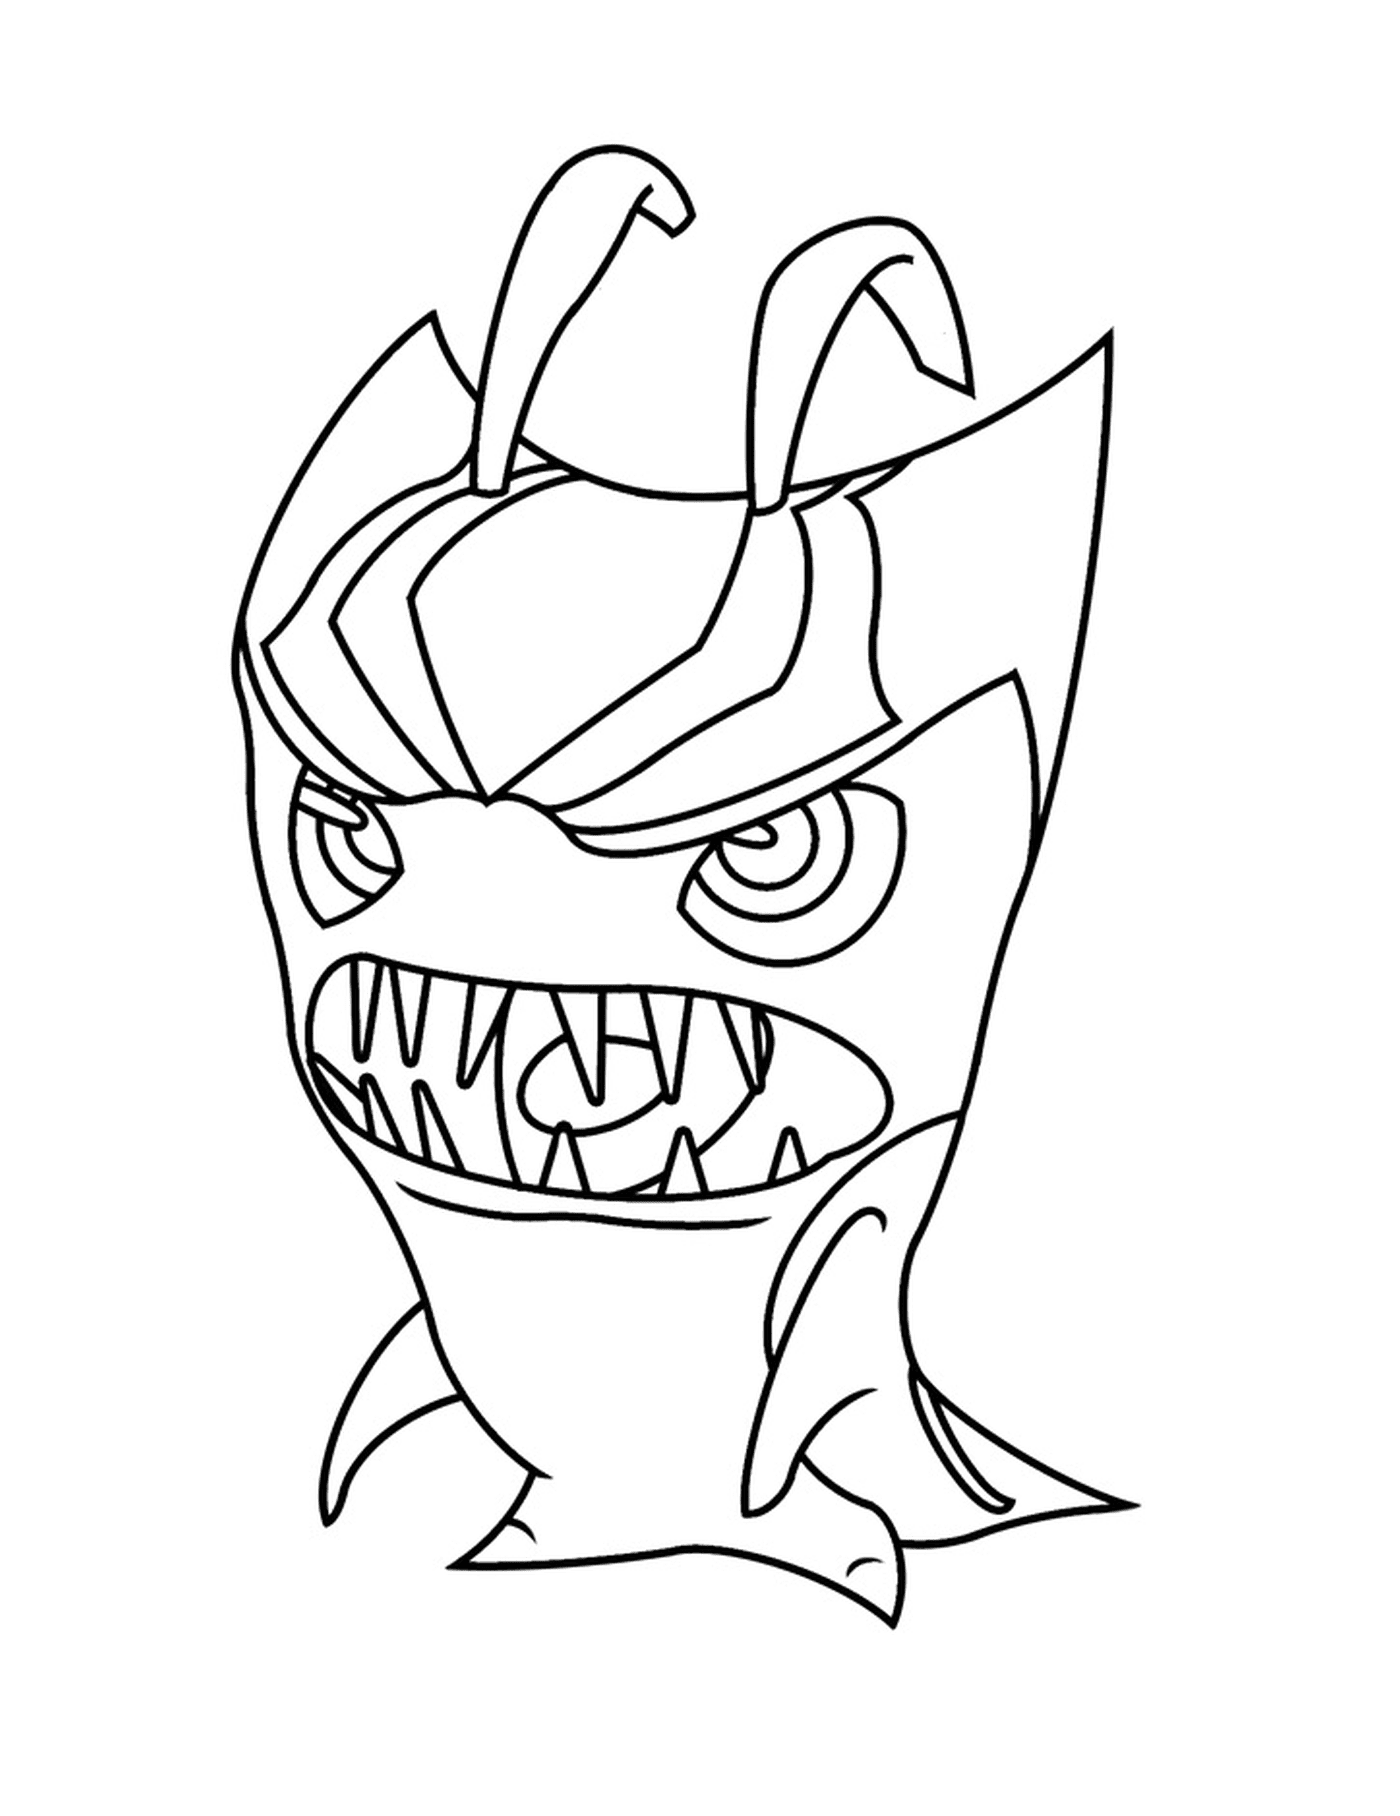  ग्रिमिमर, एक चेहरे के साथ राक्षस सिर 